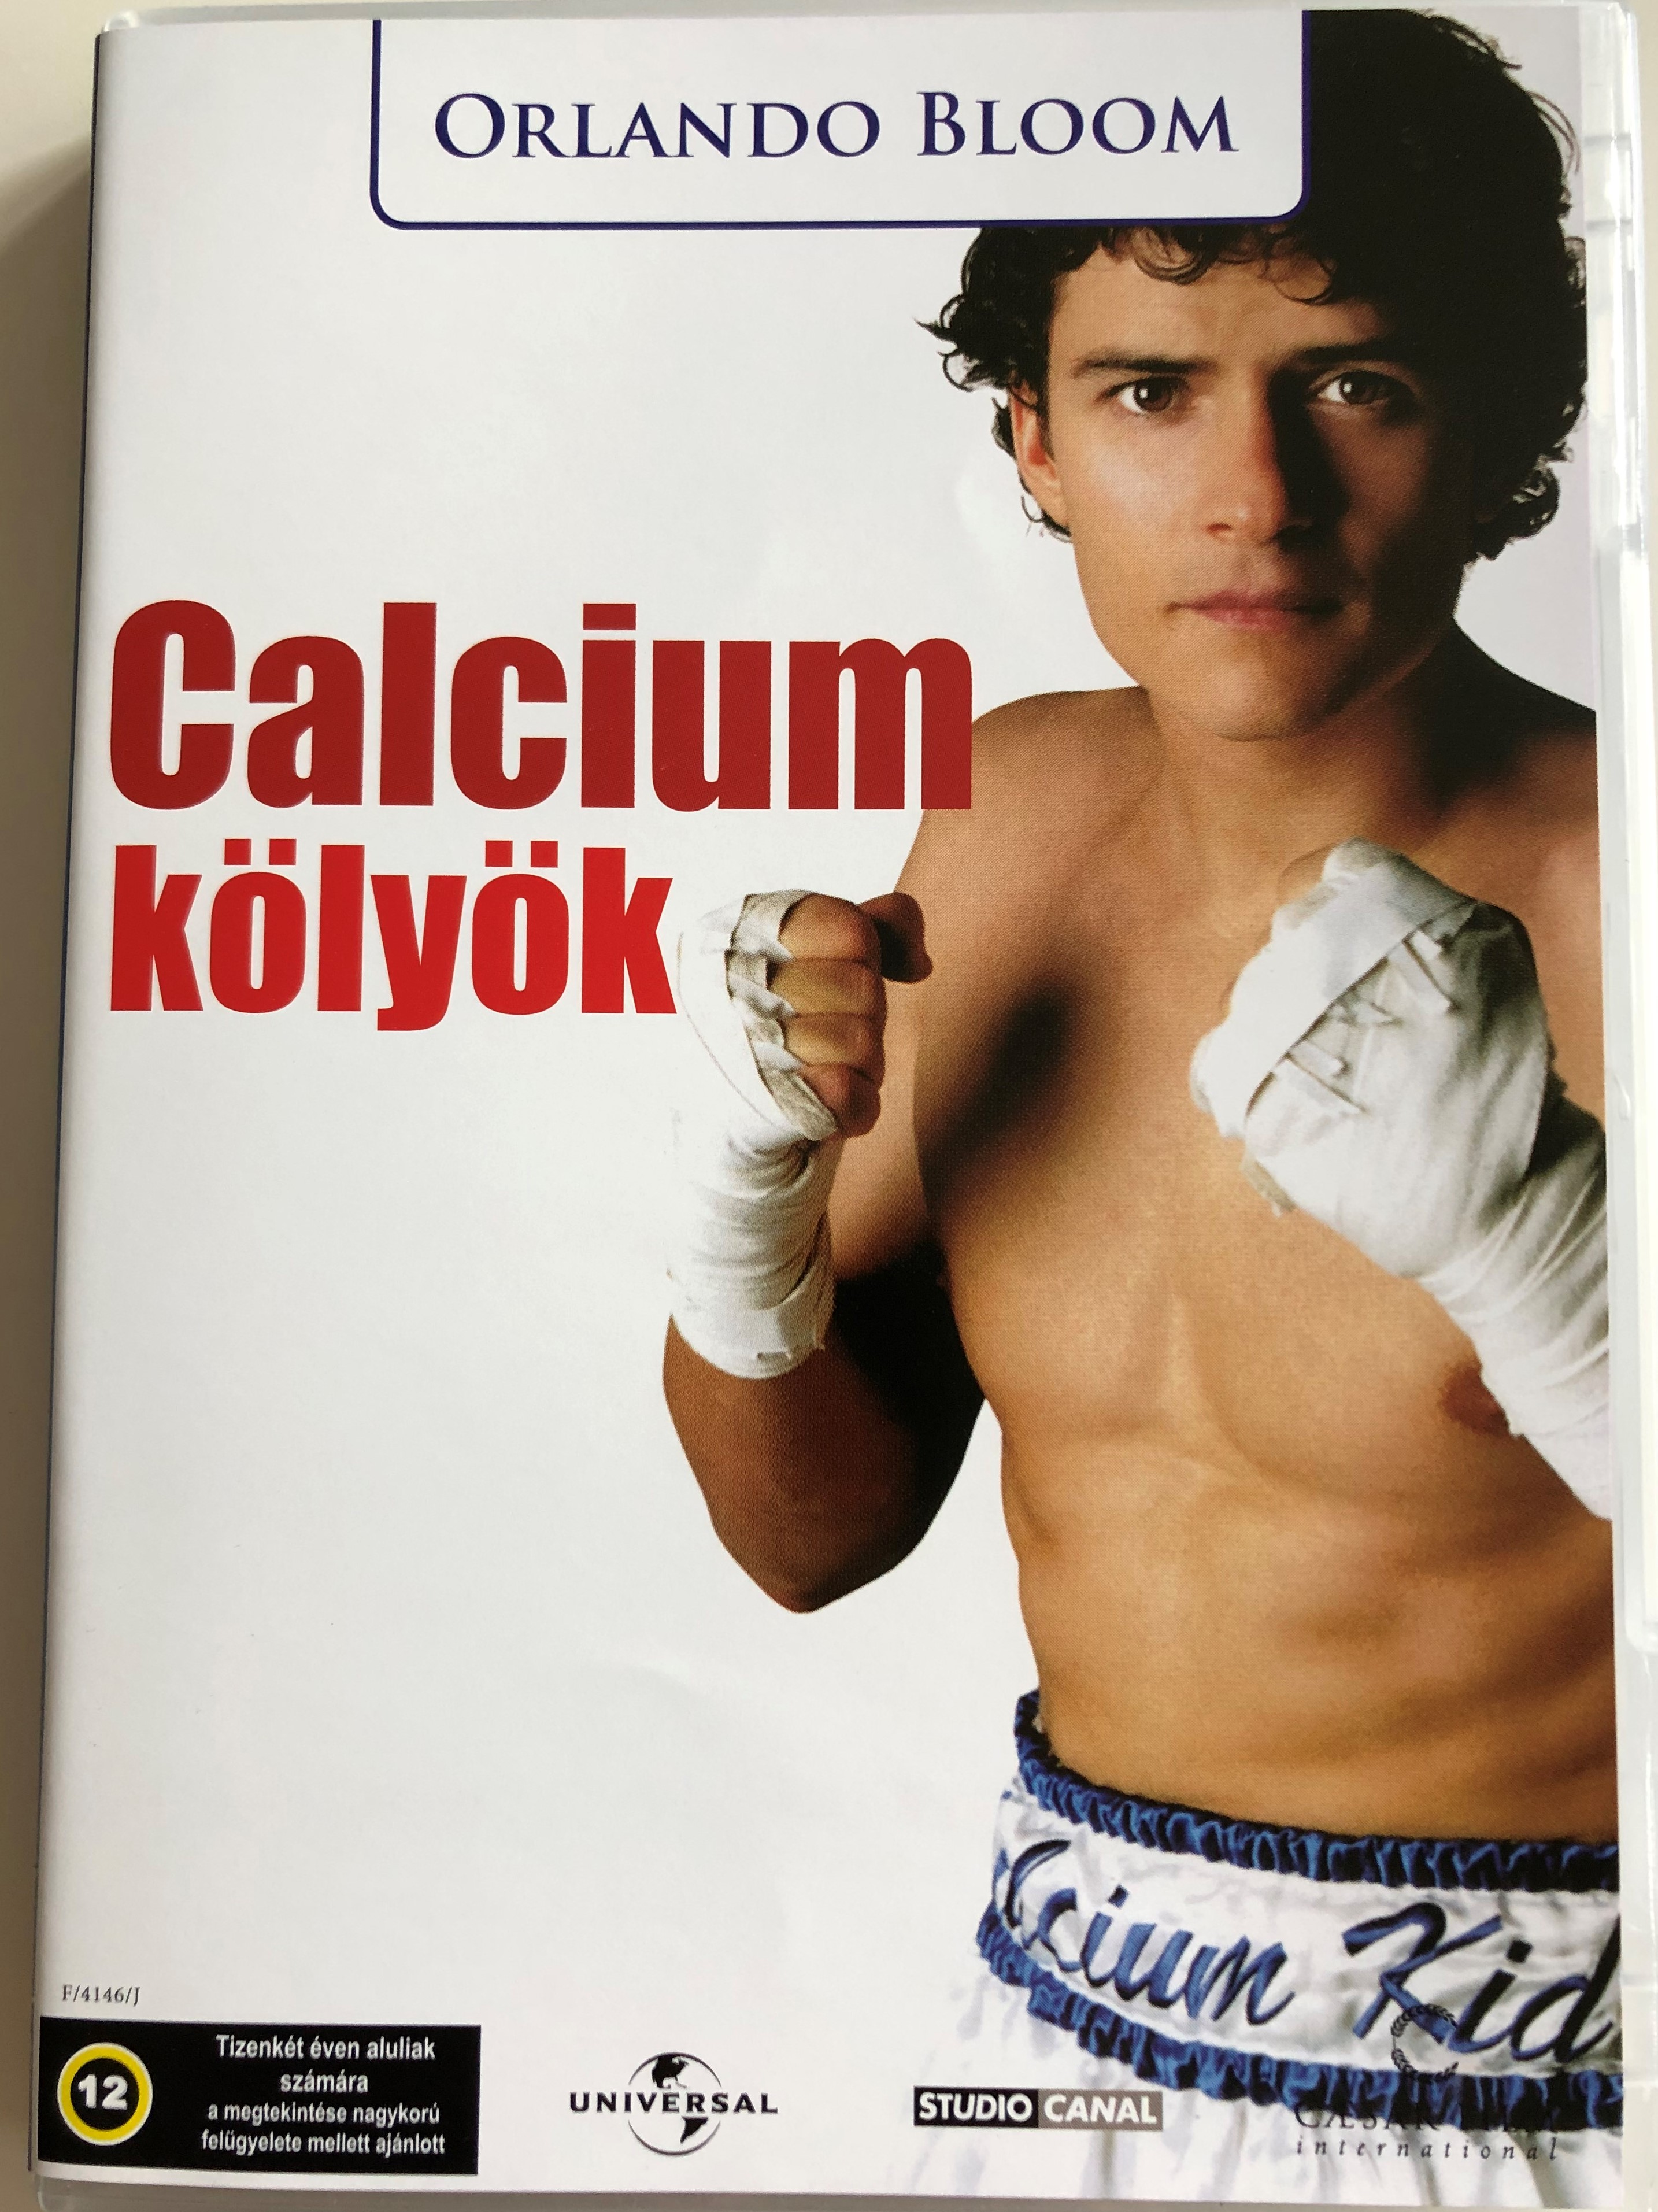 the-calcium-kid-dvd-2004-k-lcium-k-ly-k-directed-by-alex-de-rakoff-starring-orlando-bloom-michael-pe-a-michael-lerner-billie-piper-mark-heap-1-.jpg